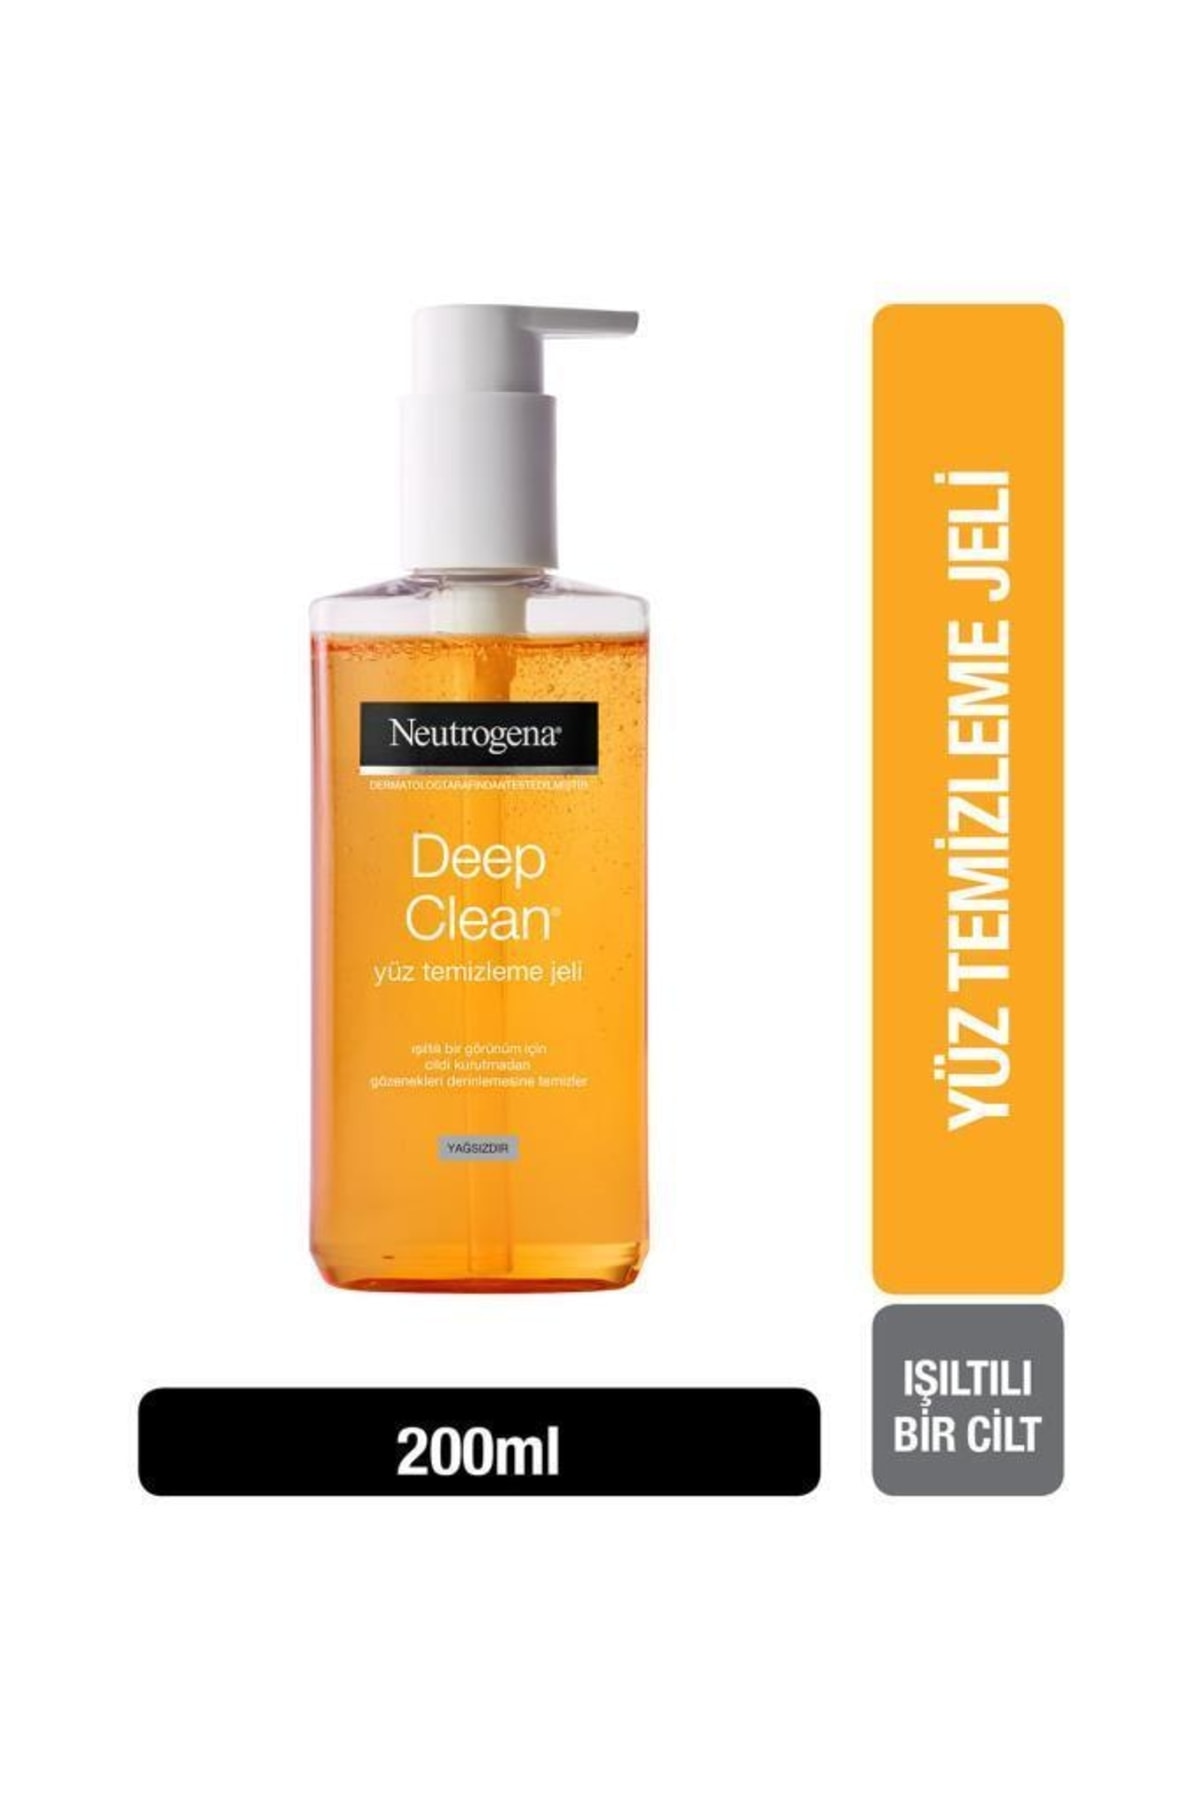 Neutrogena Deep Clean Yüz Temizleme Jeli, 200 ml